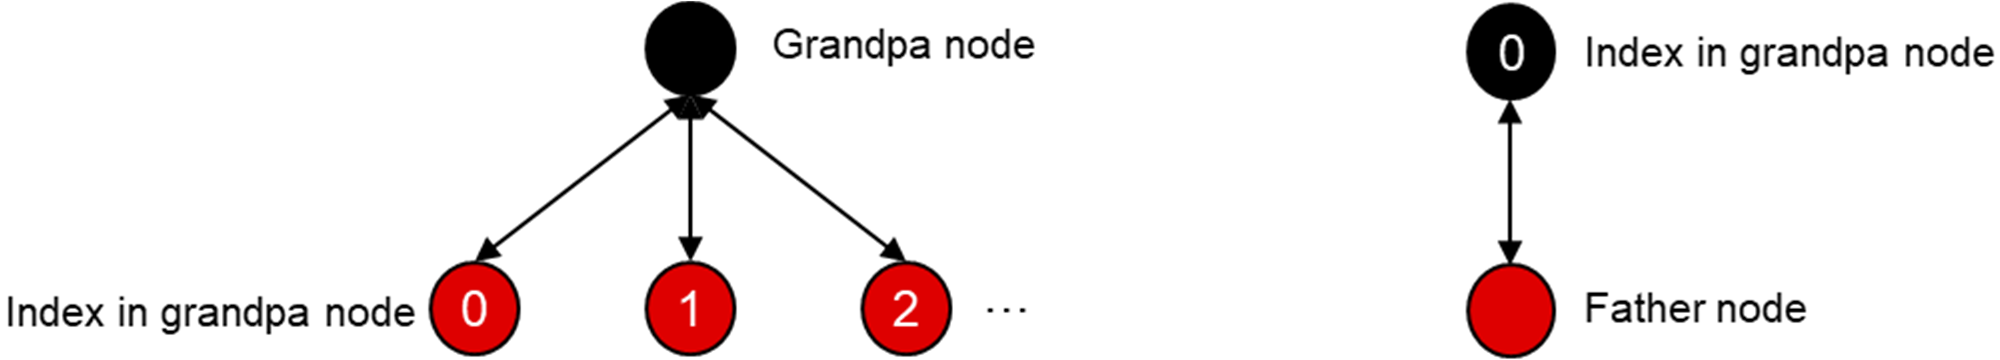 different-index-grandpa-node-father-node.png